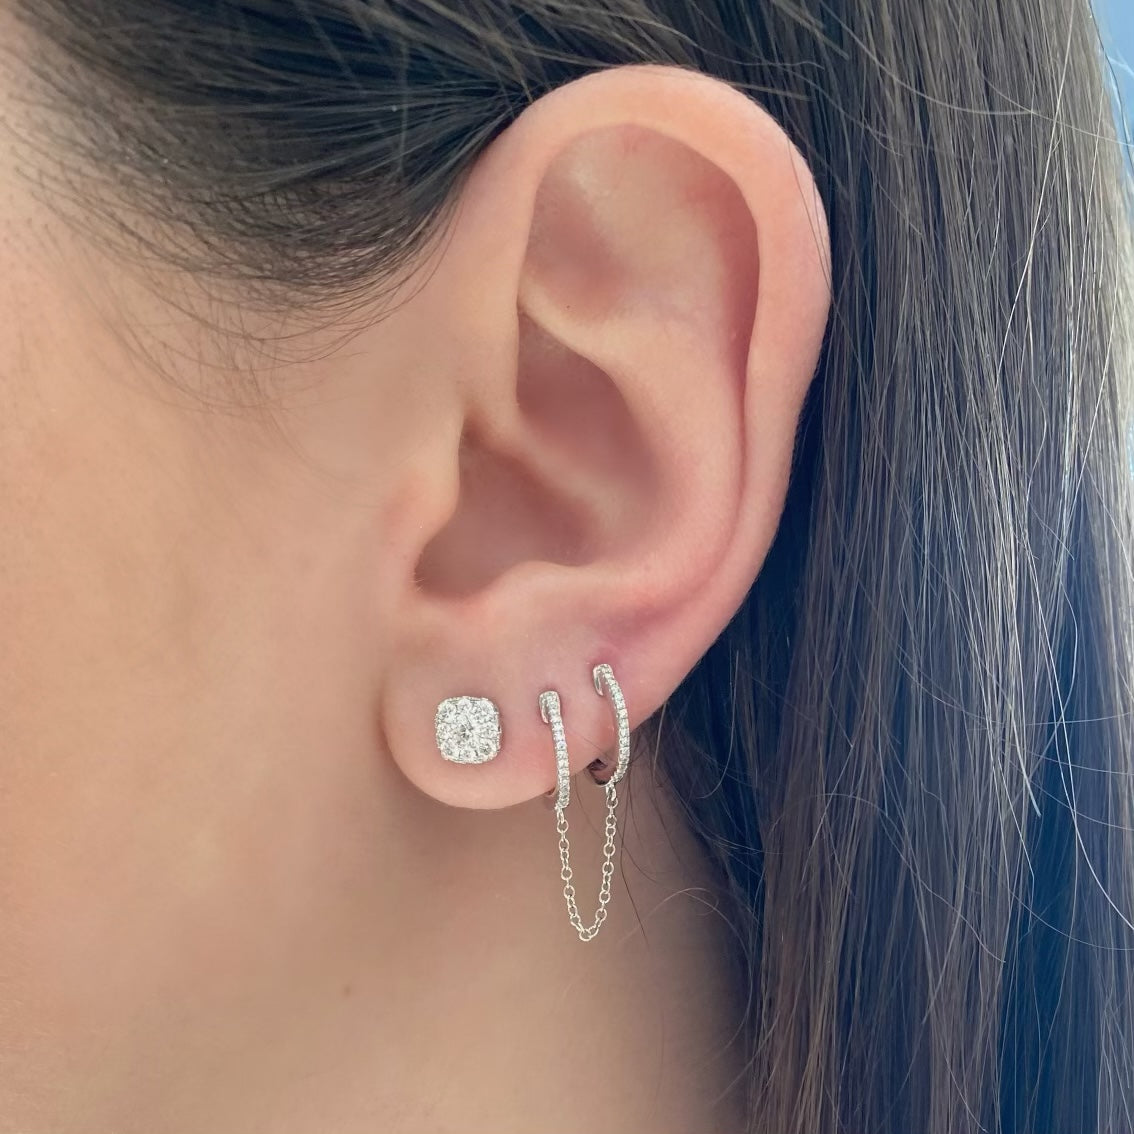 Aggregate 281+ double piercing earrings online super hot